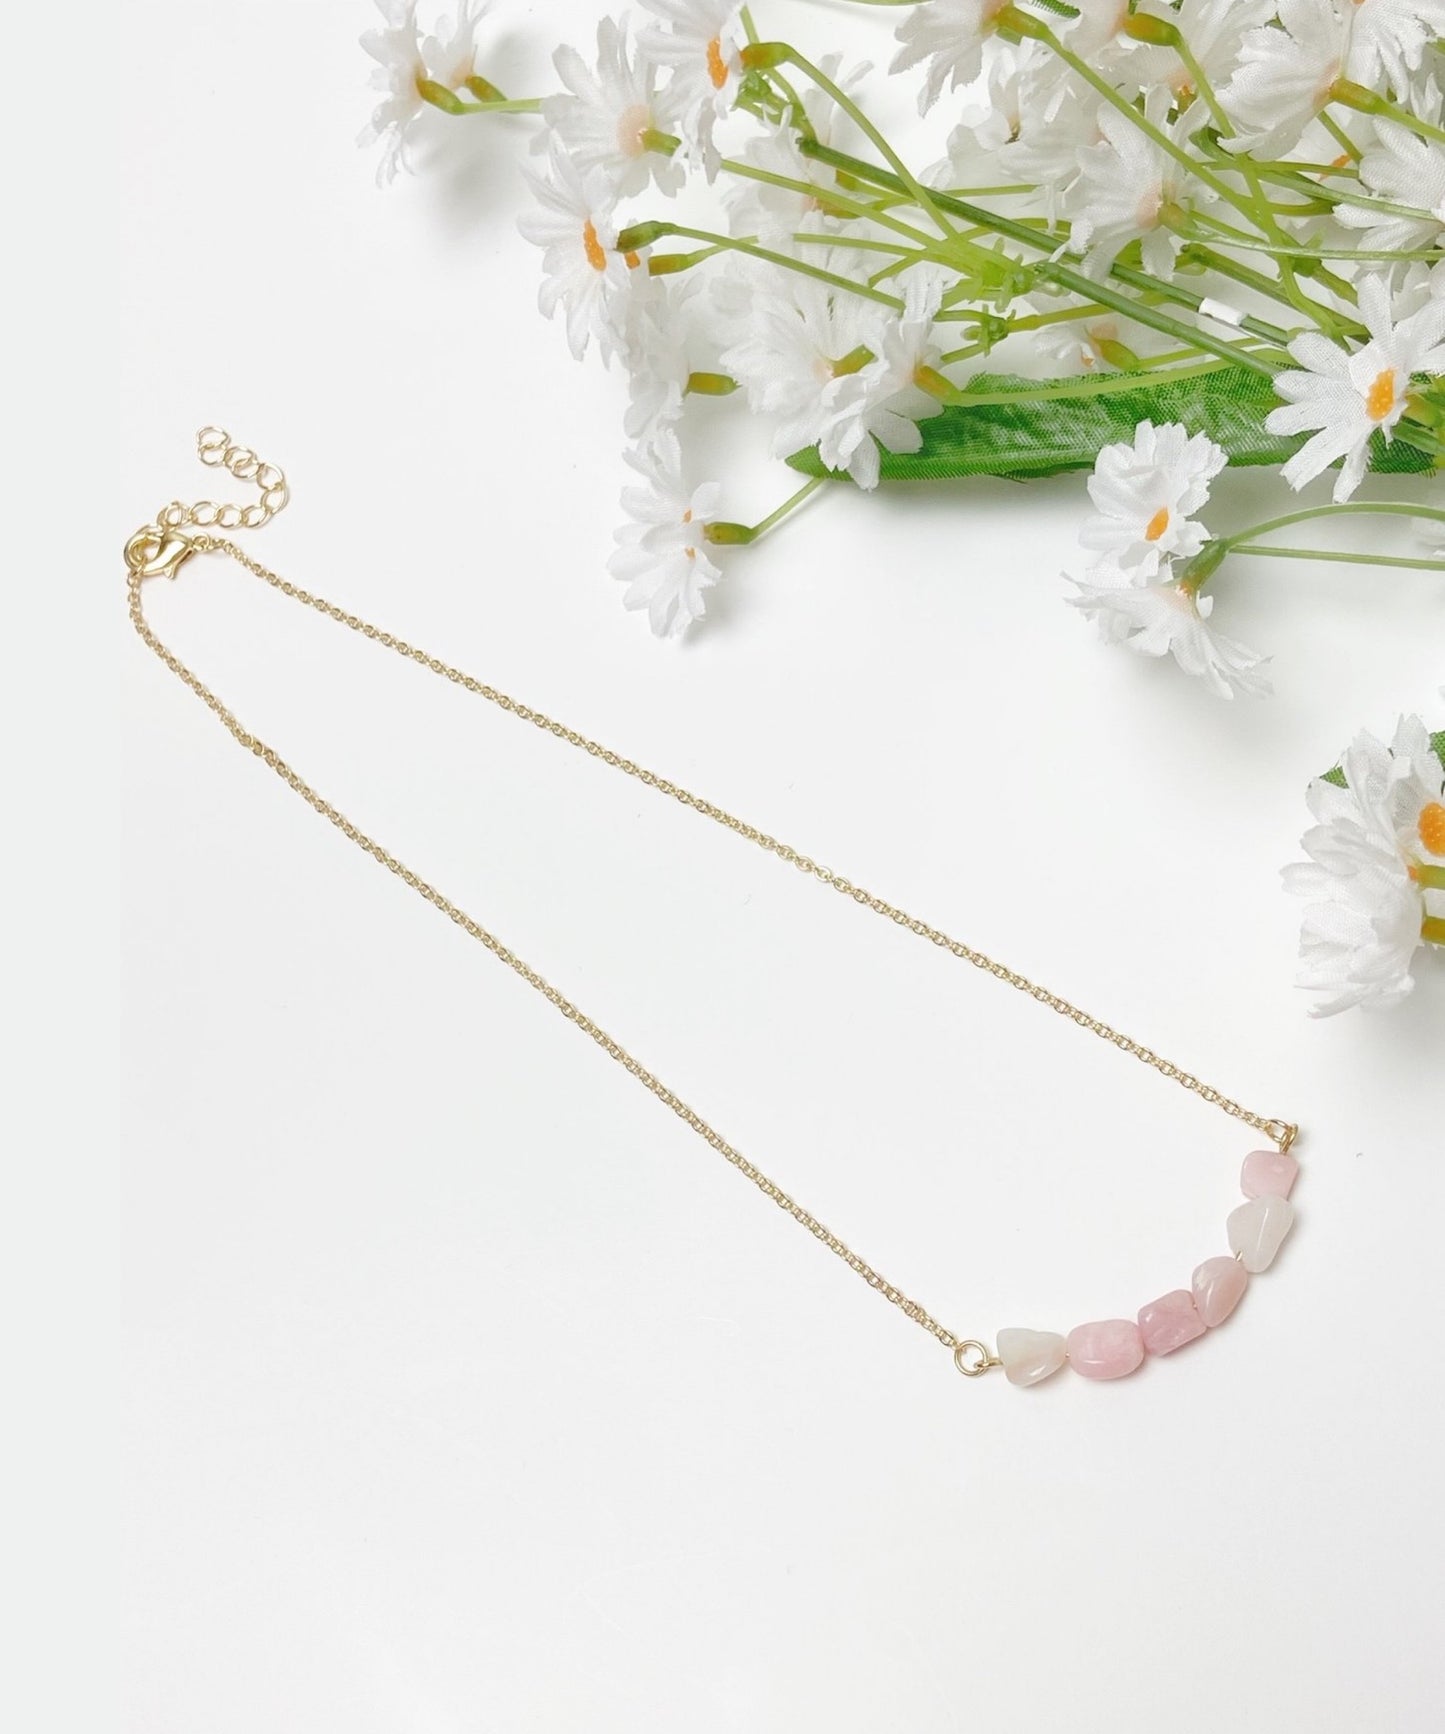 Pink Selenite Healing Stone Necklace